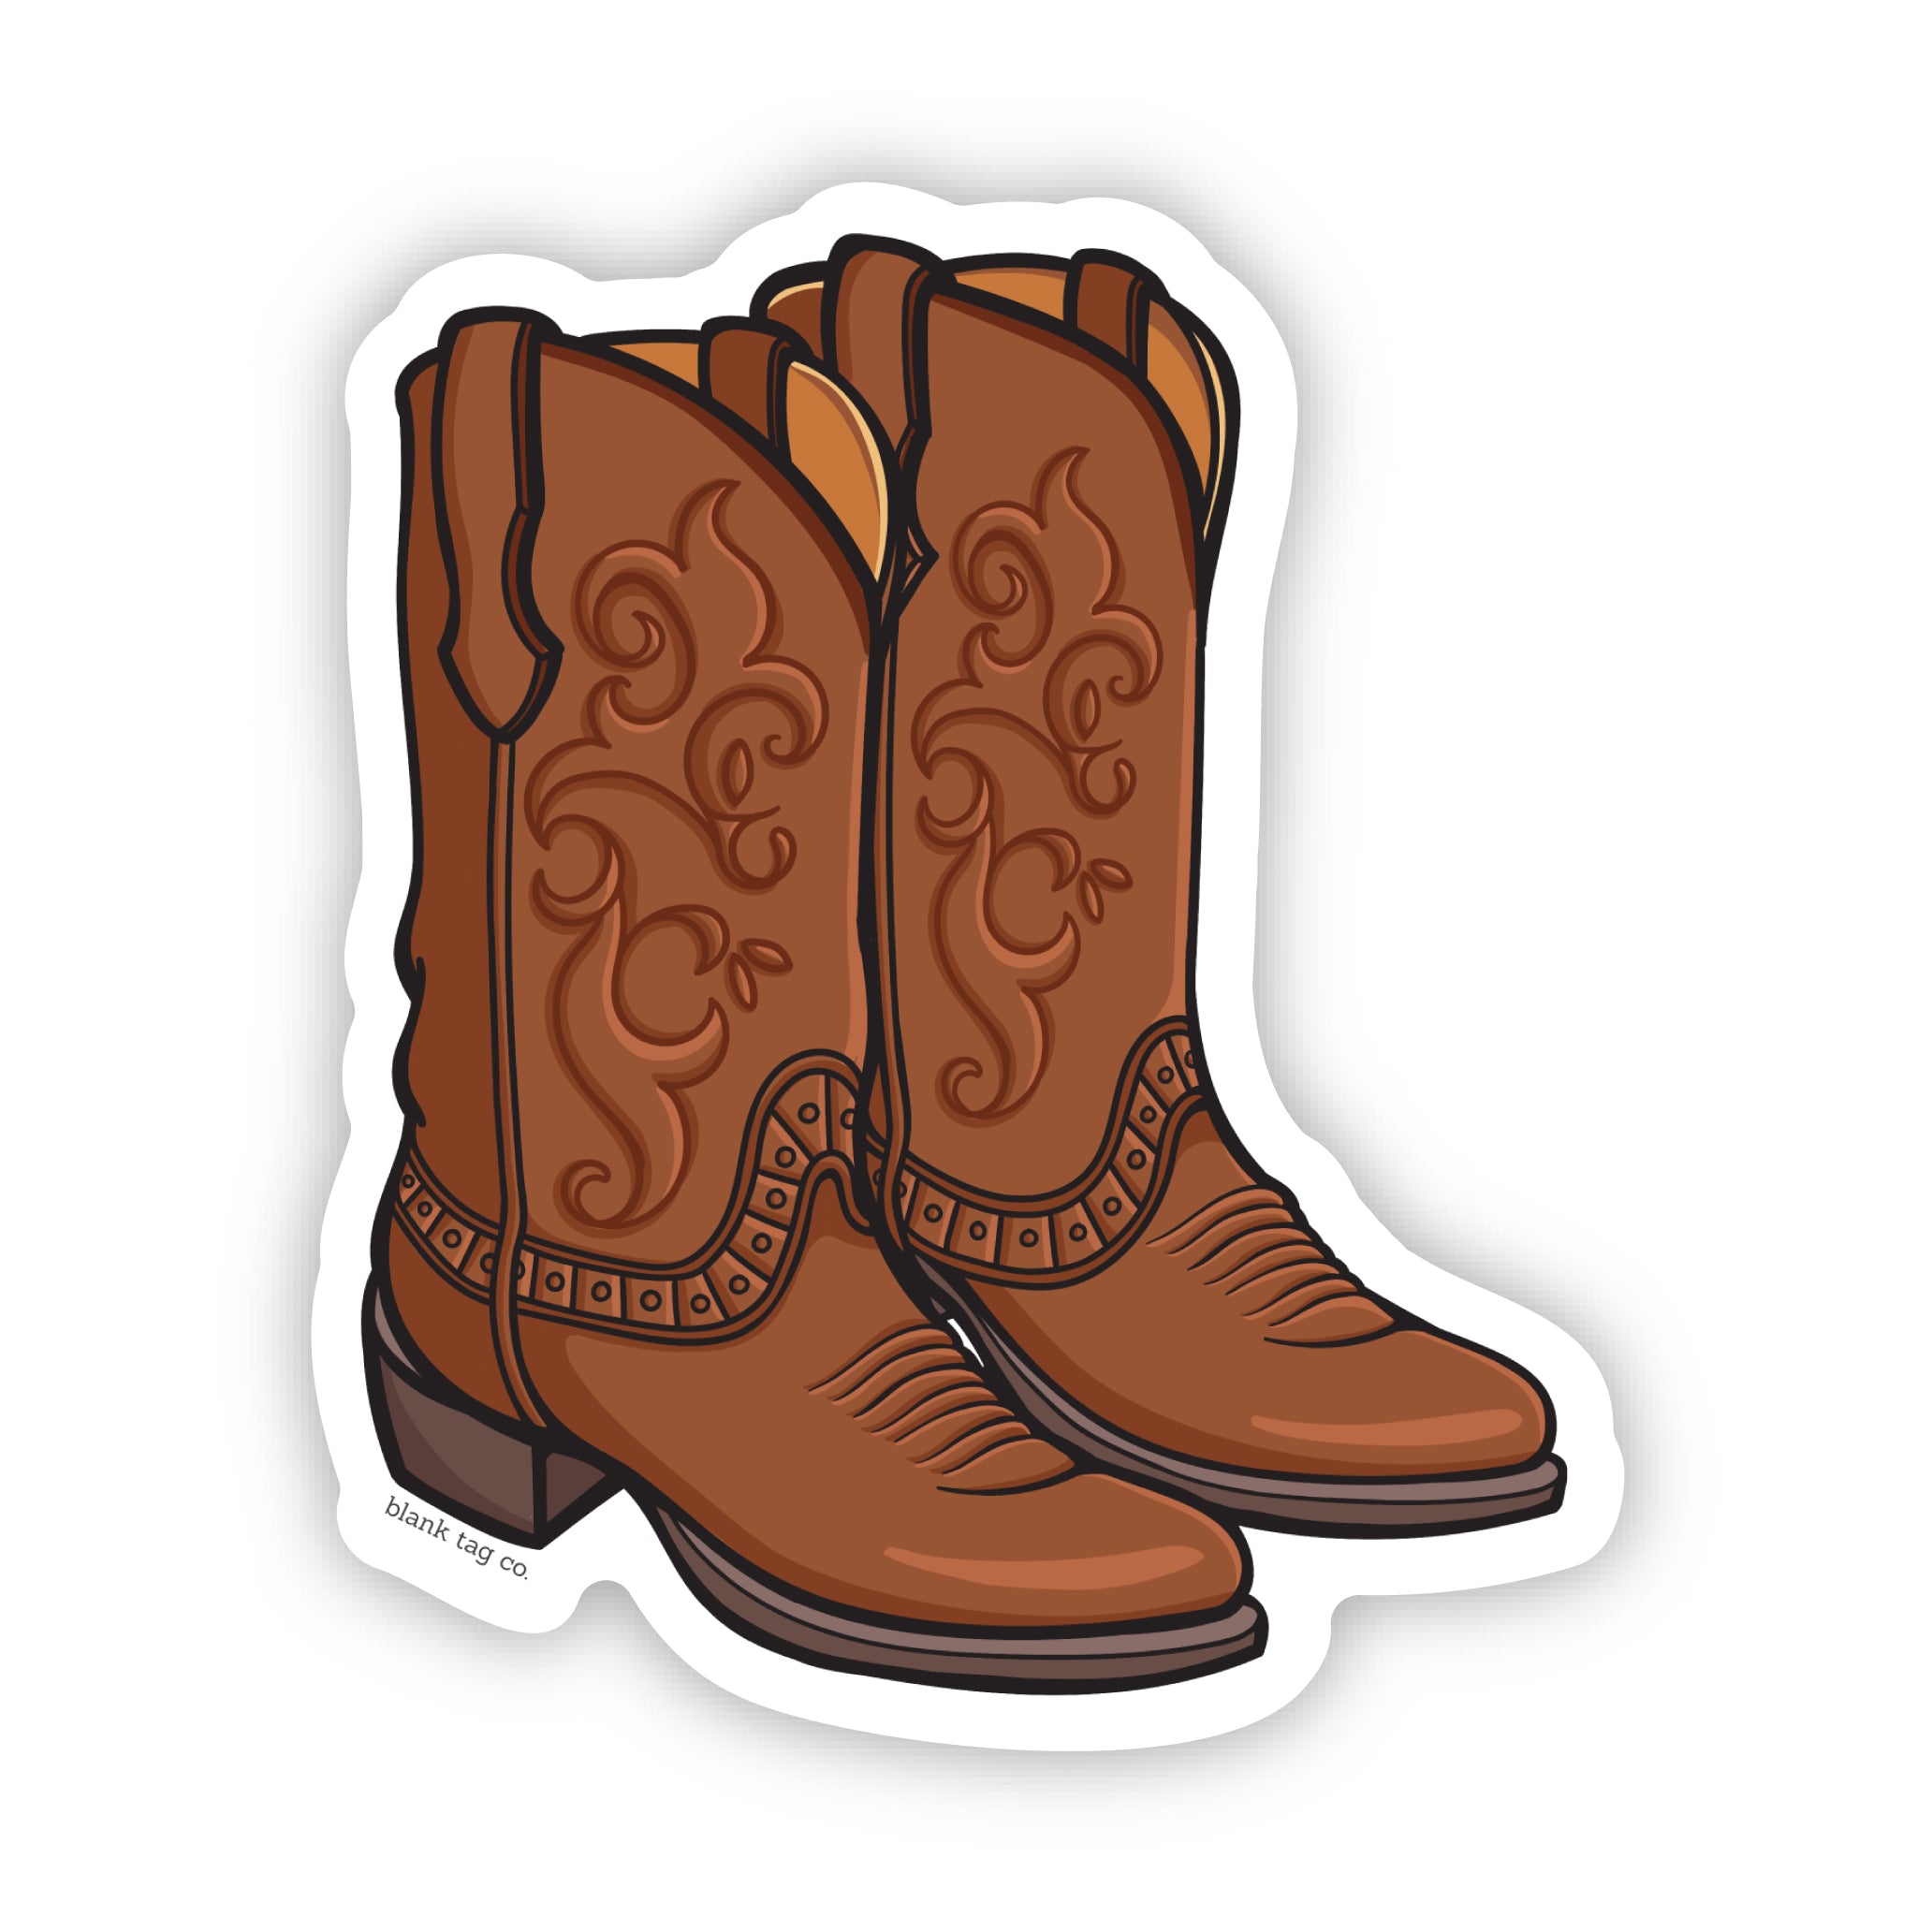 The Cowboy Boots Sticker